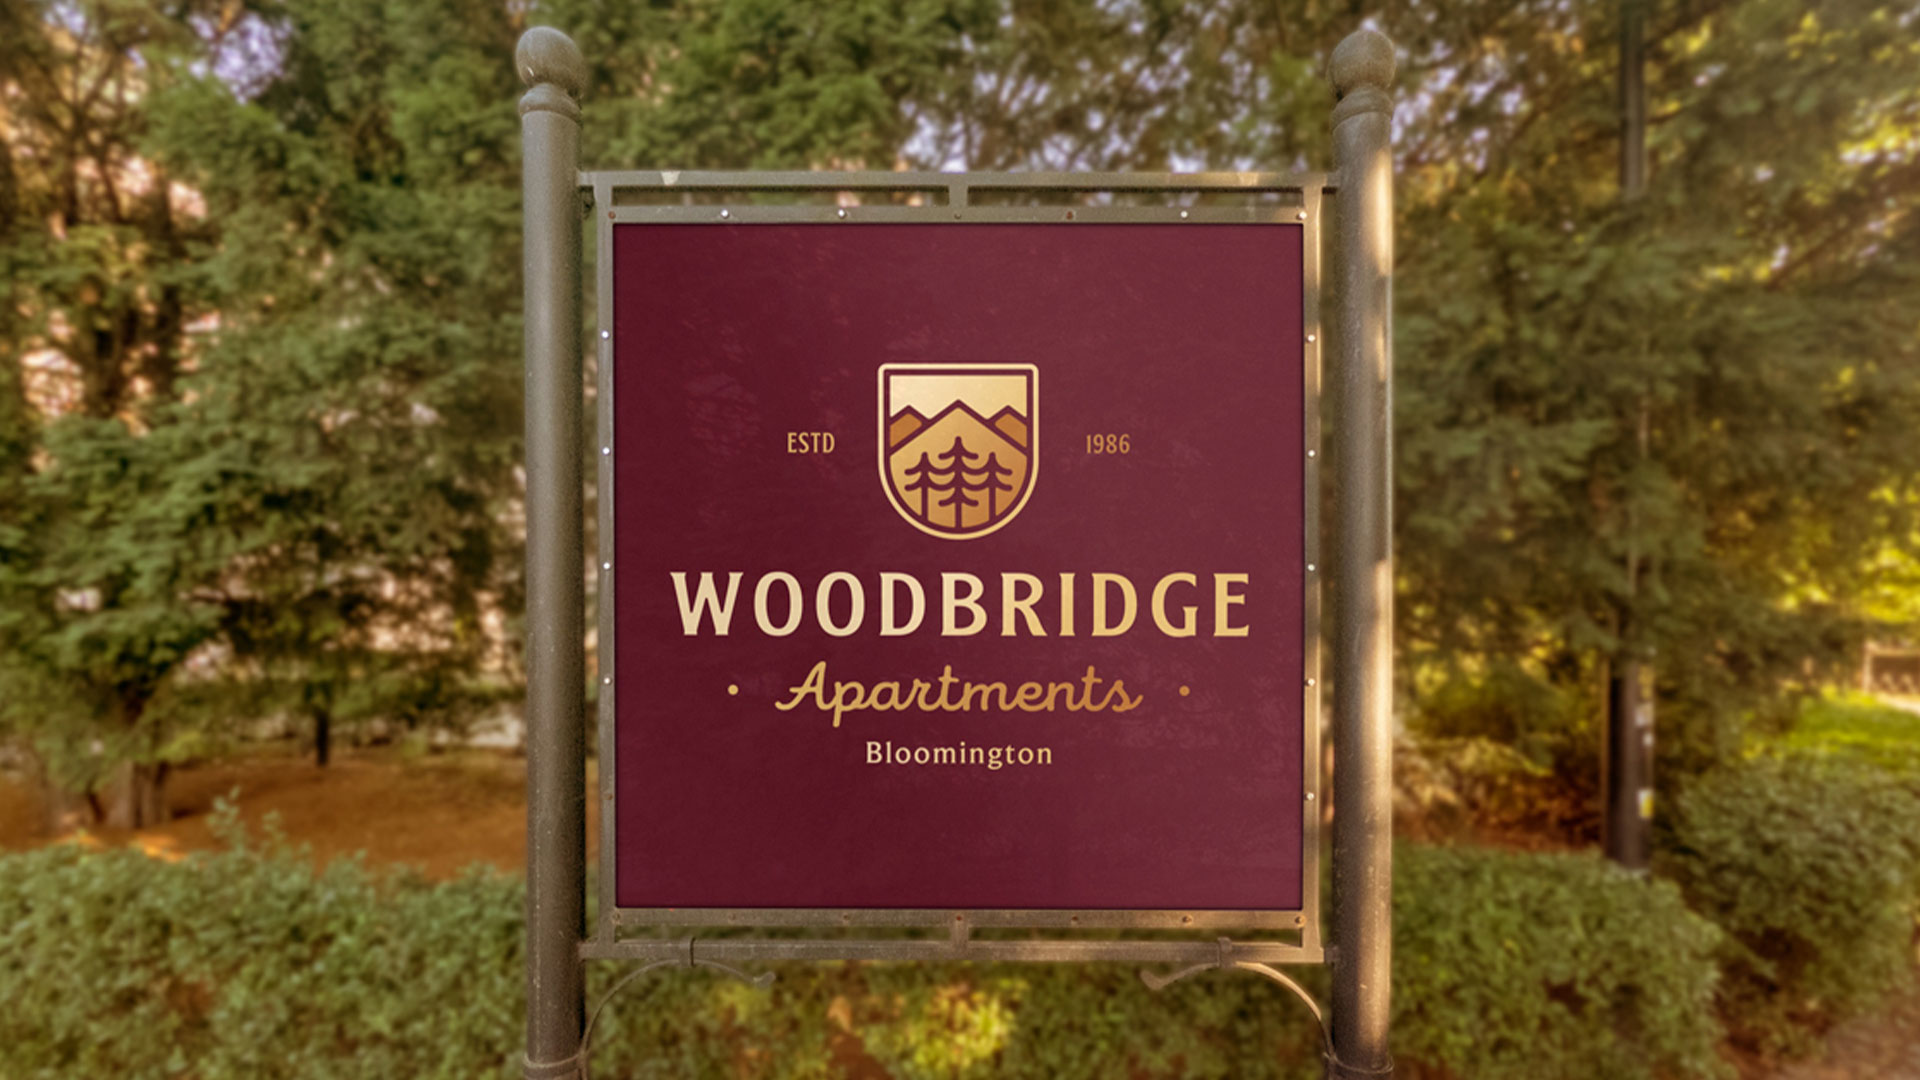 woodbridge appartments logo design